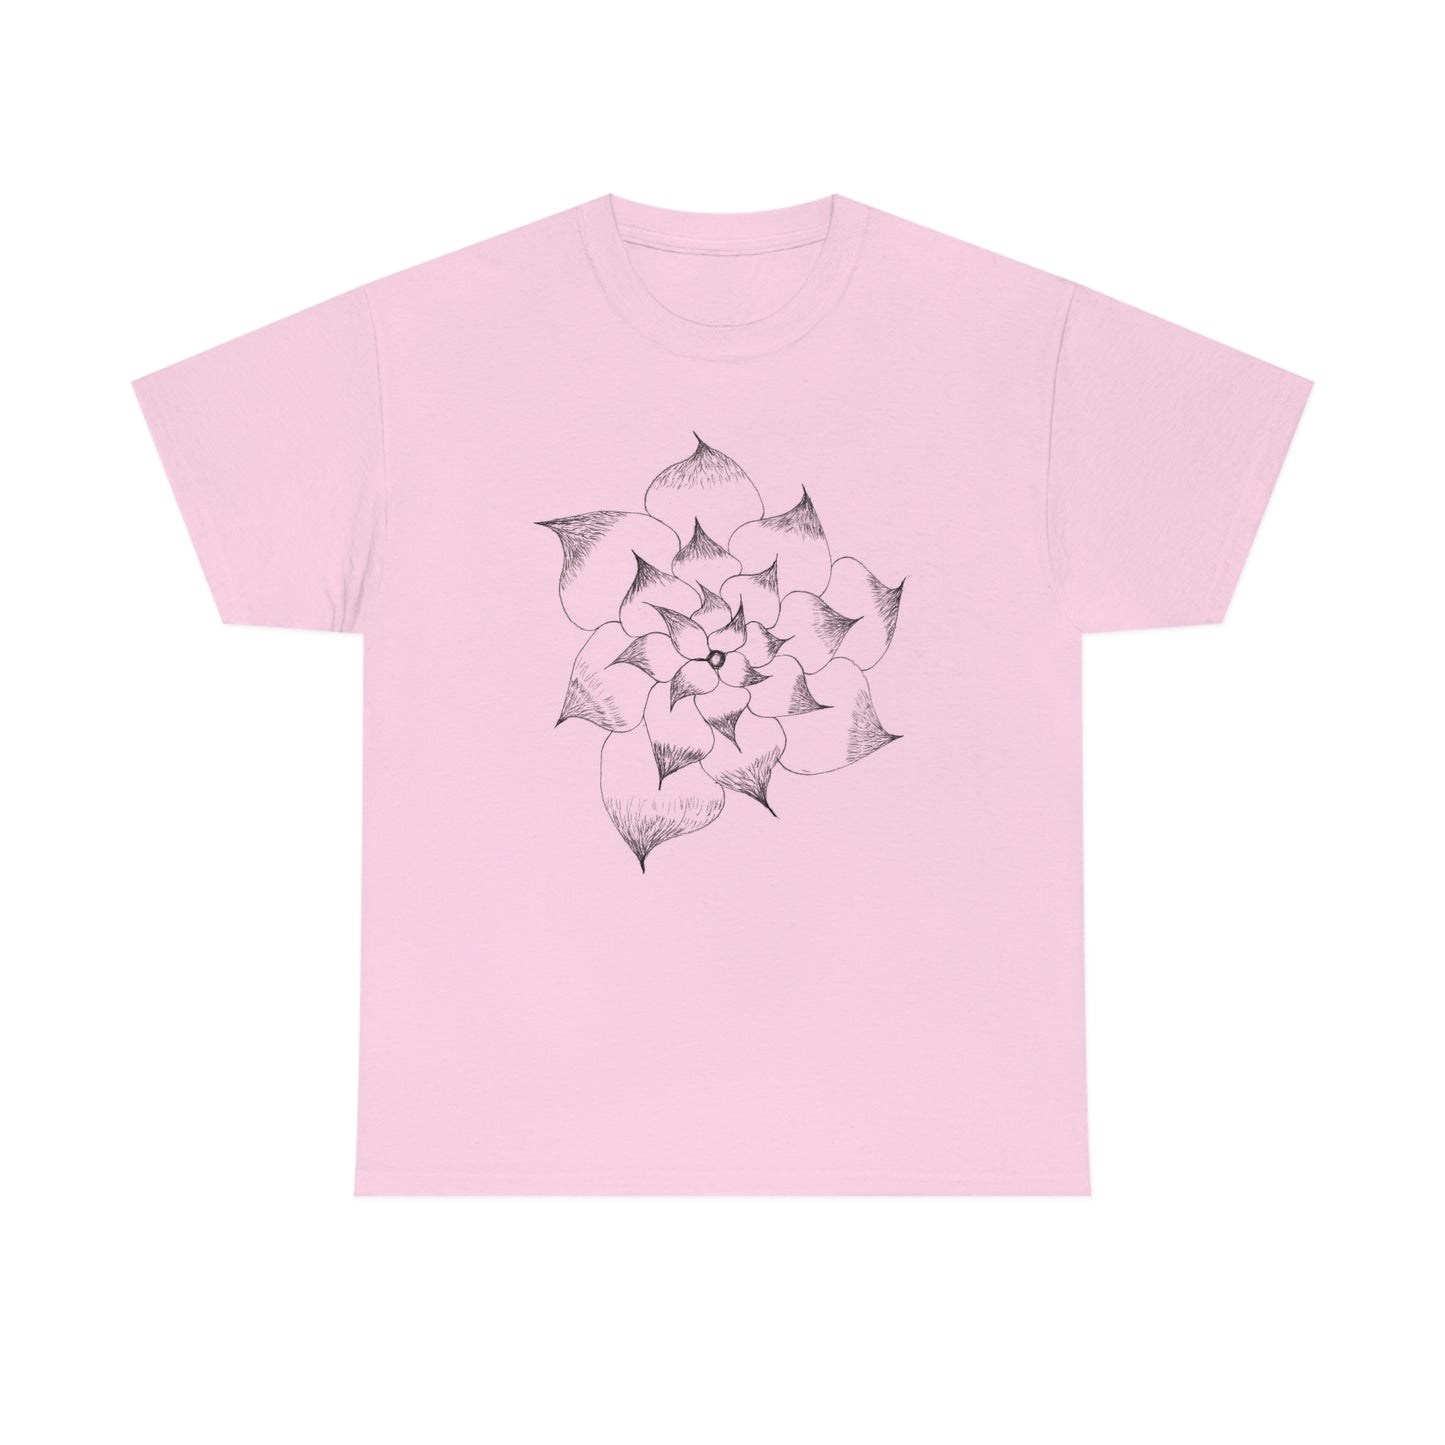 Flower Tee, custom designed tee, flower t-shirt, floral graphic tee